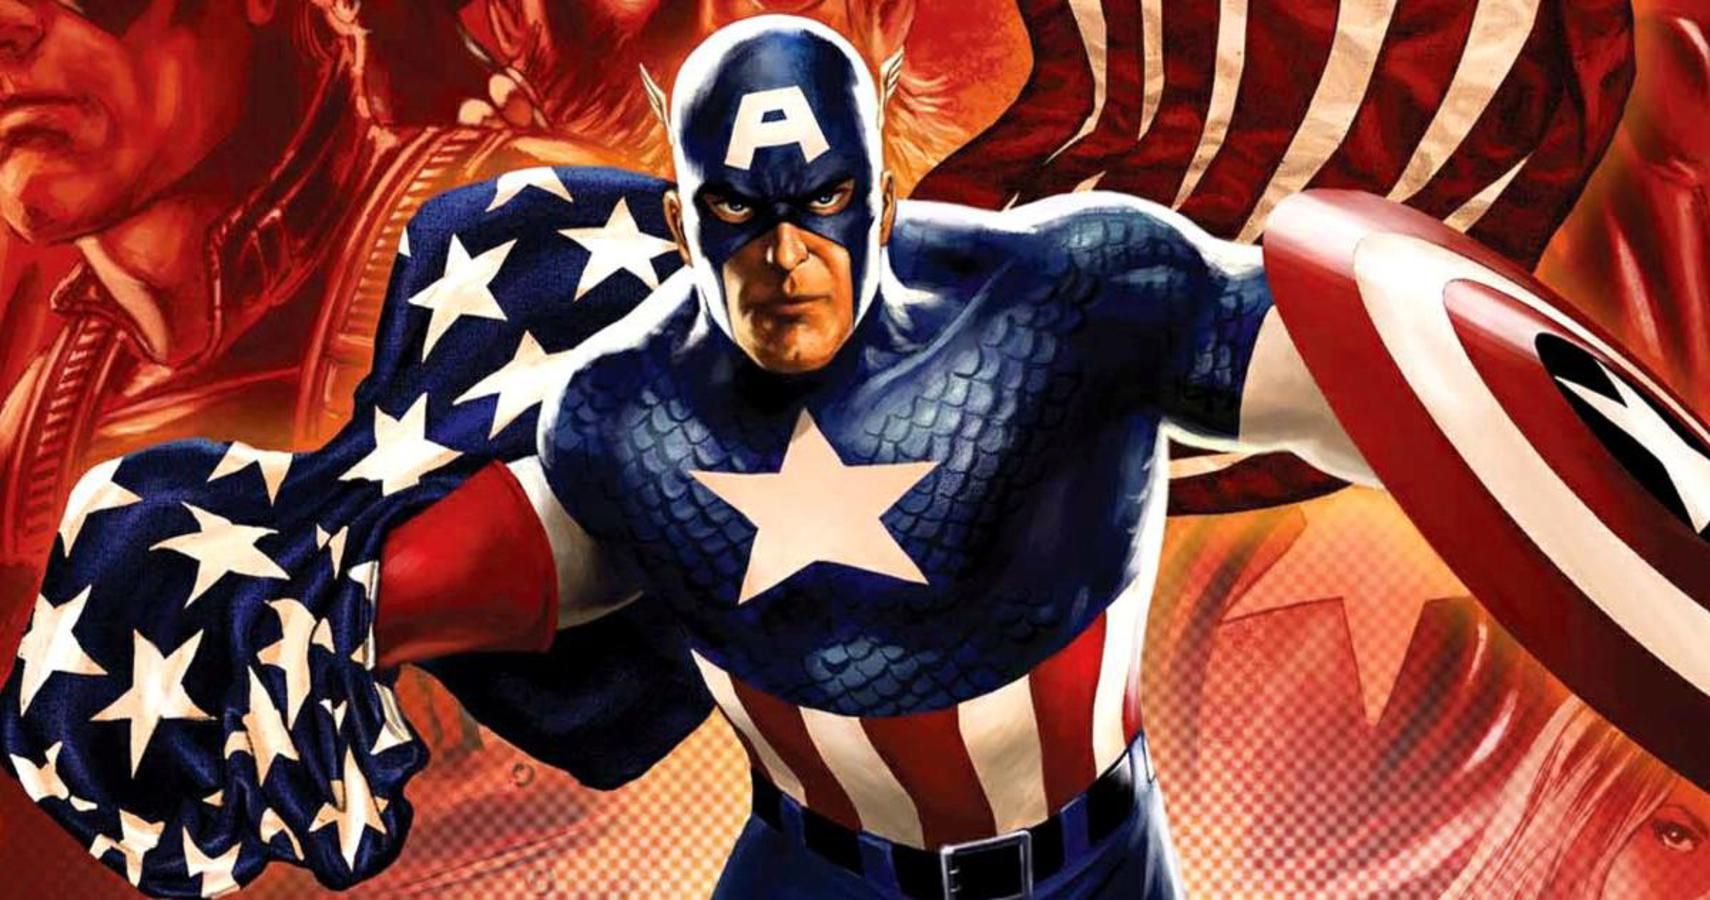 Captain America holding the flag